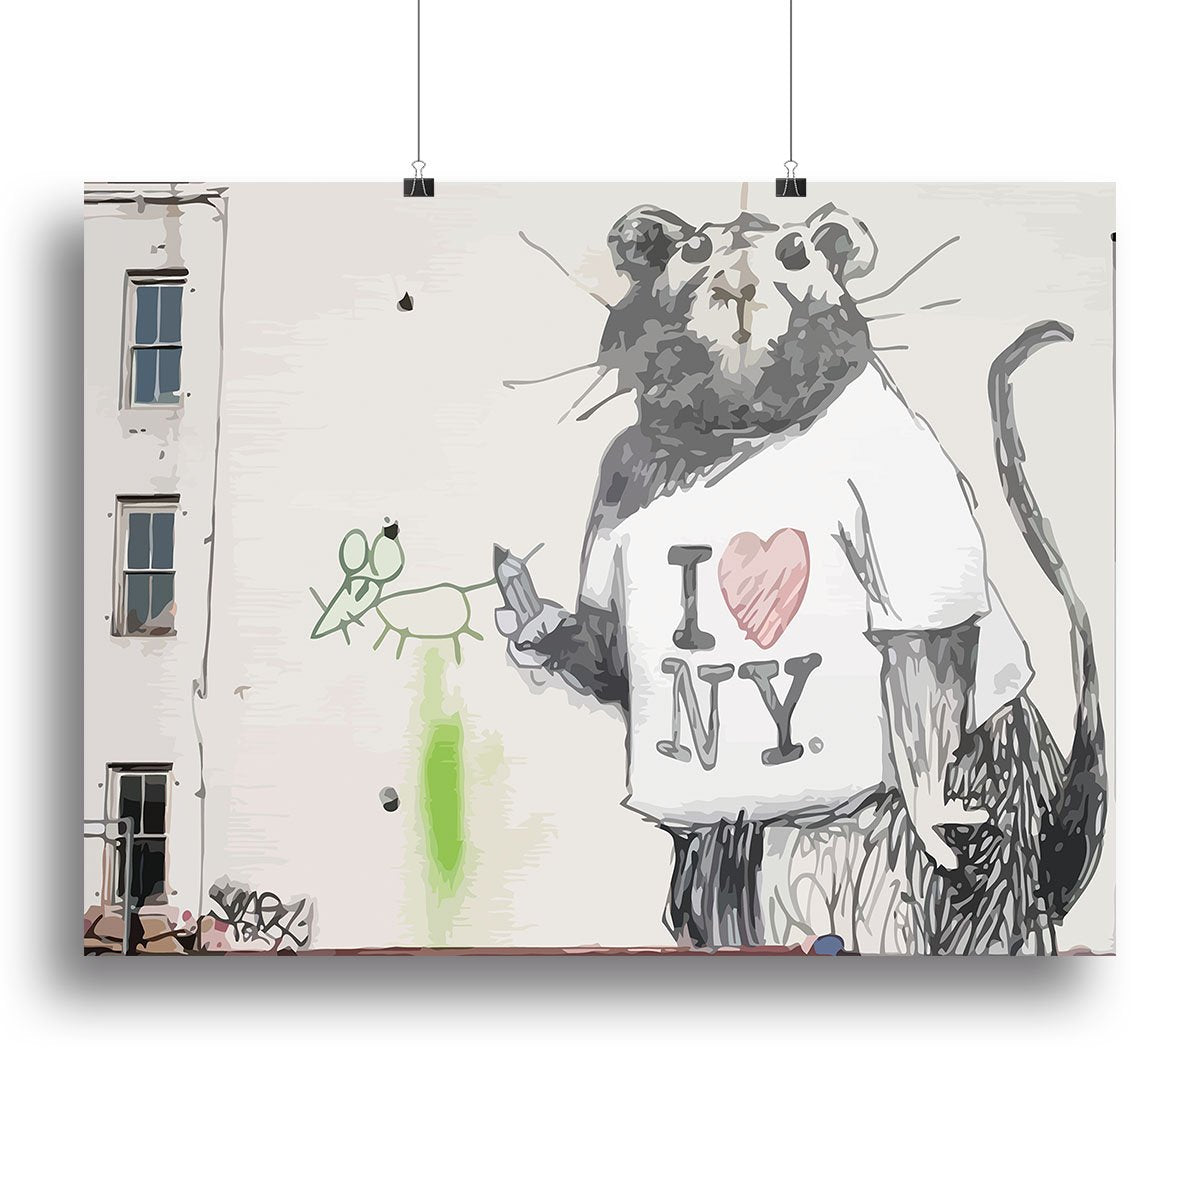 Tableau street art - Banksy - Rat